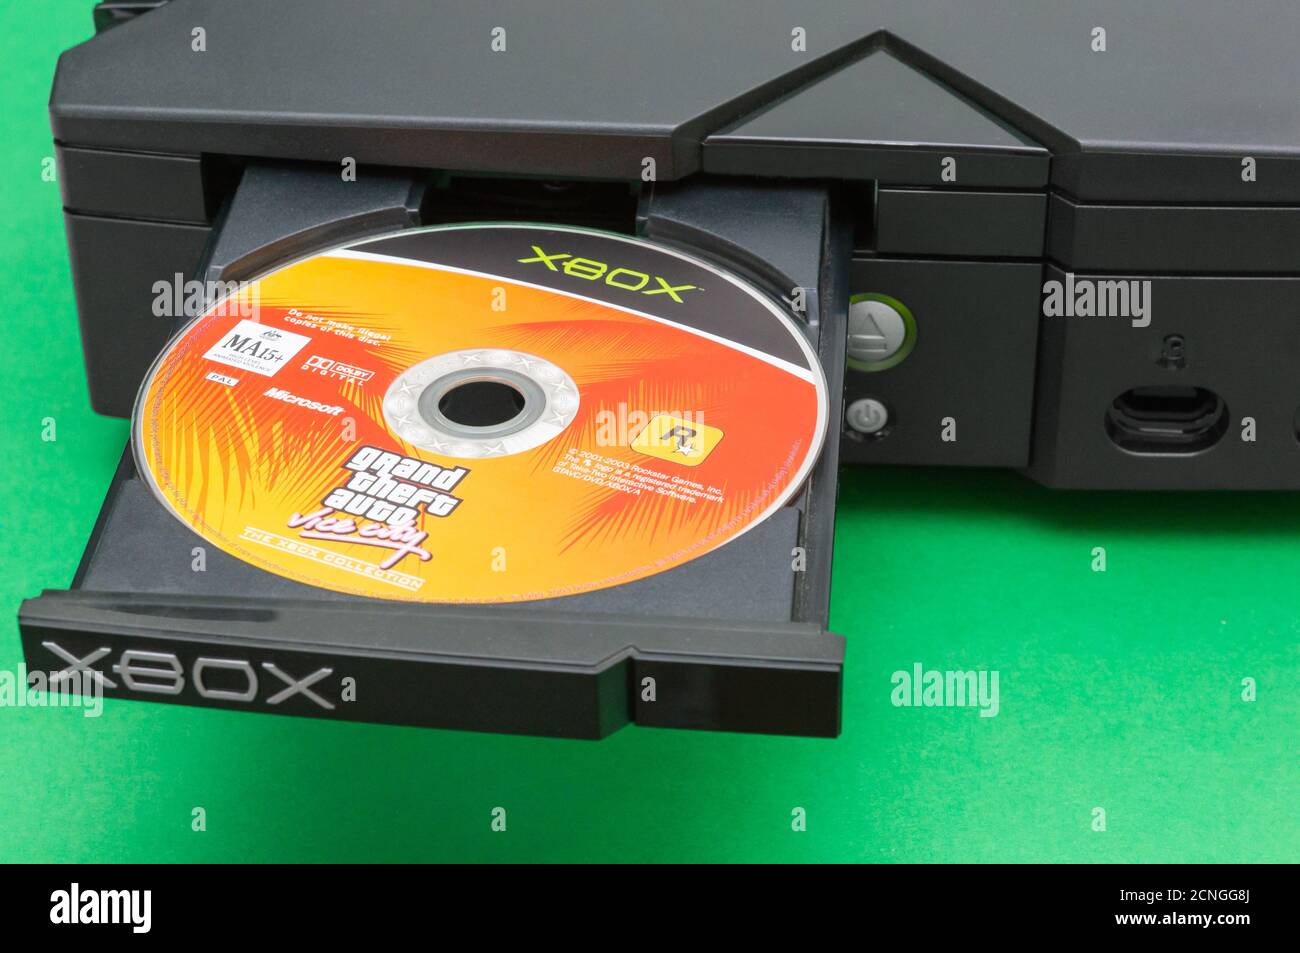 Melbourne, Australia – July 25th 2020: Original Xbox Console with disc in open tray Stock Photo